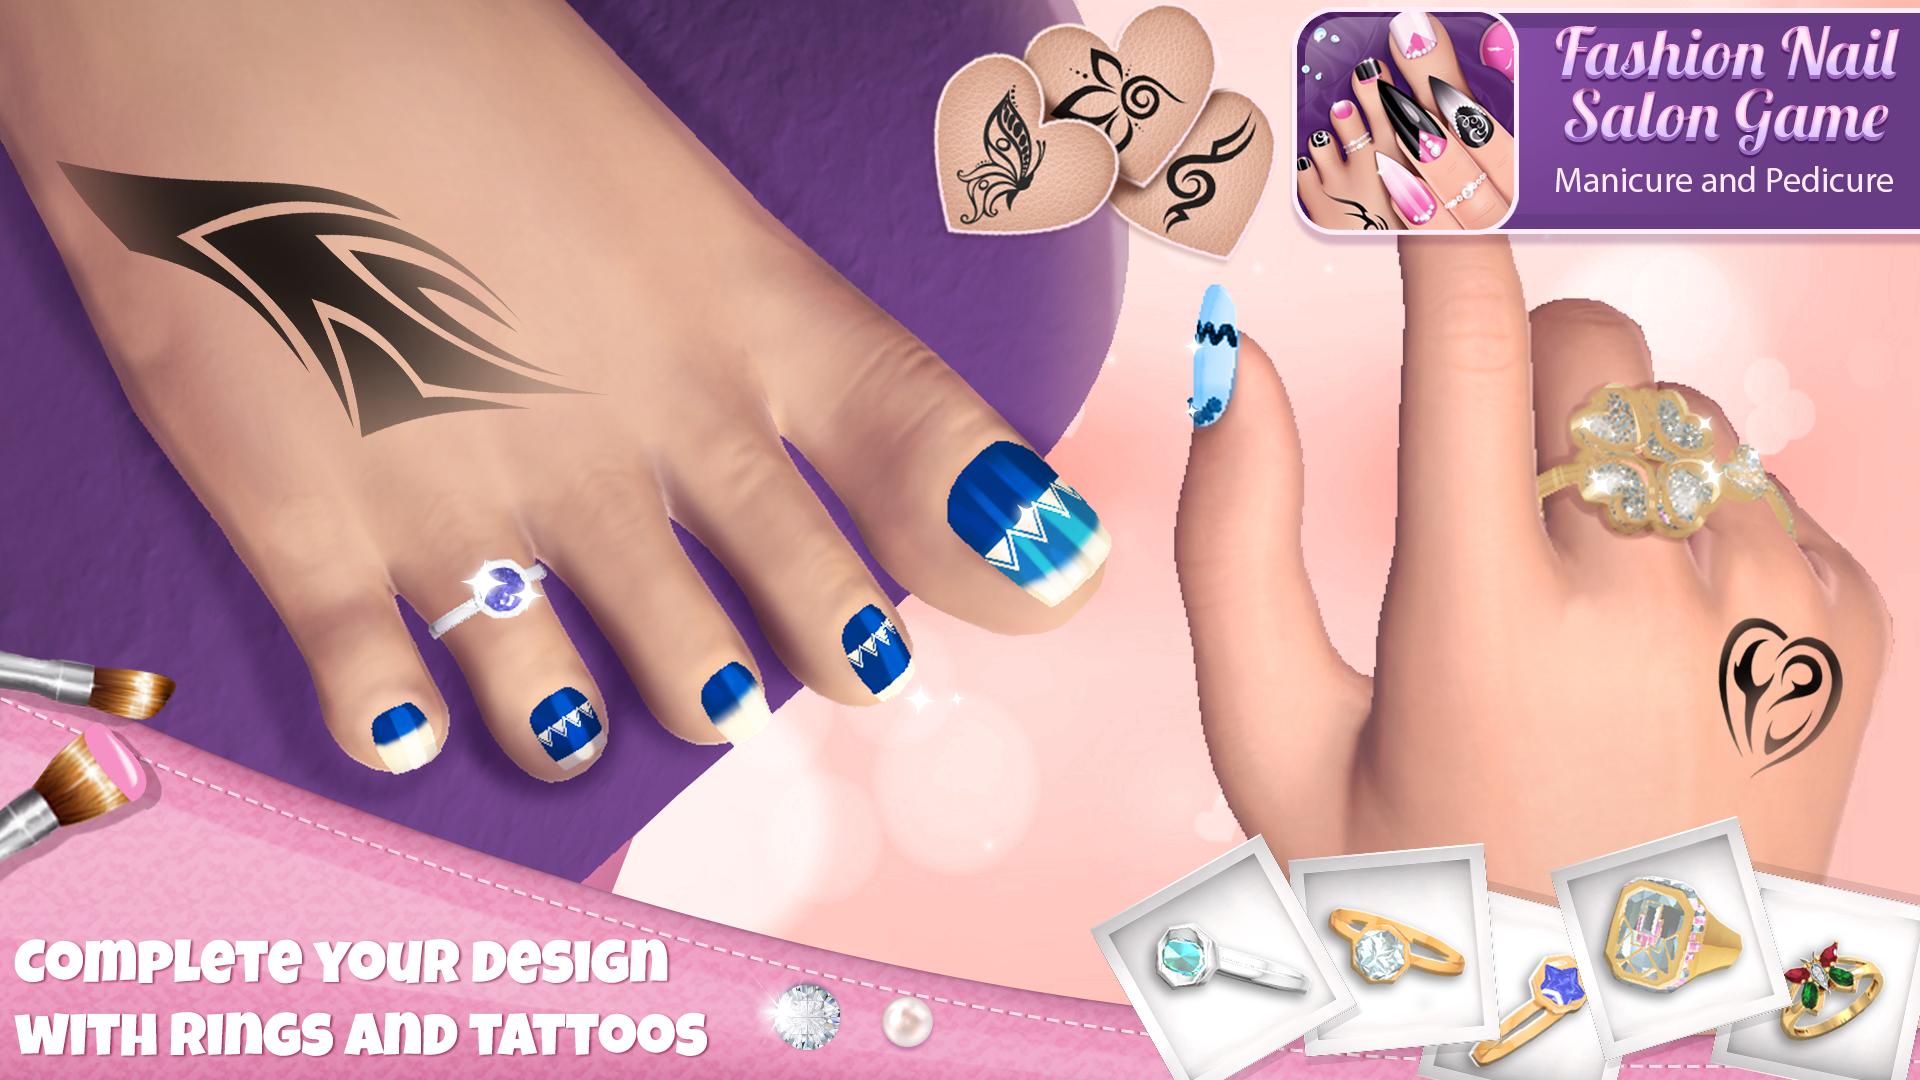 Fashion Nail Salon Game: Manicure and Pedicure App 1.1.1 Screenshot 3